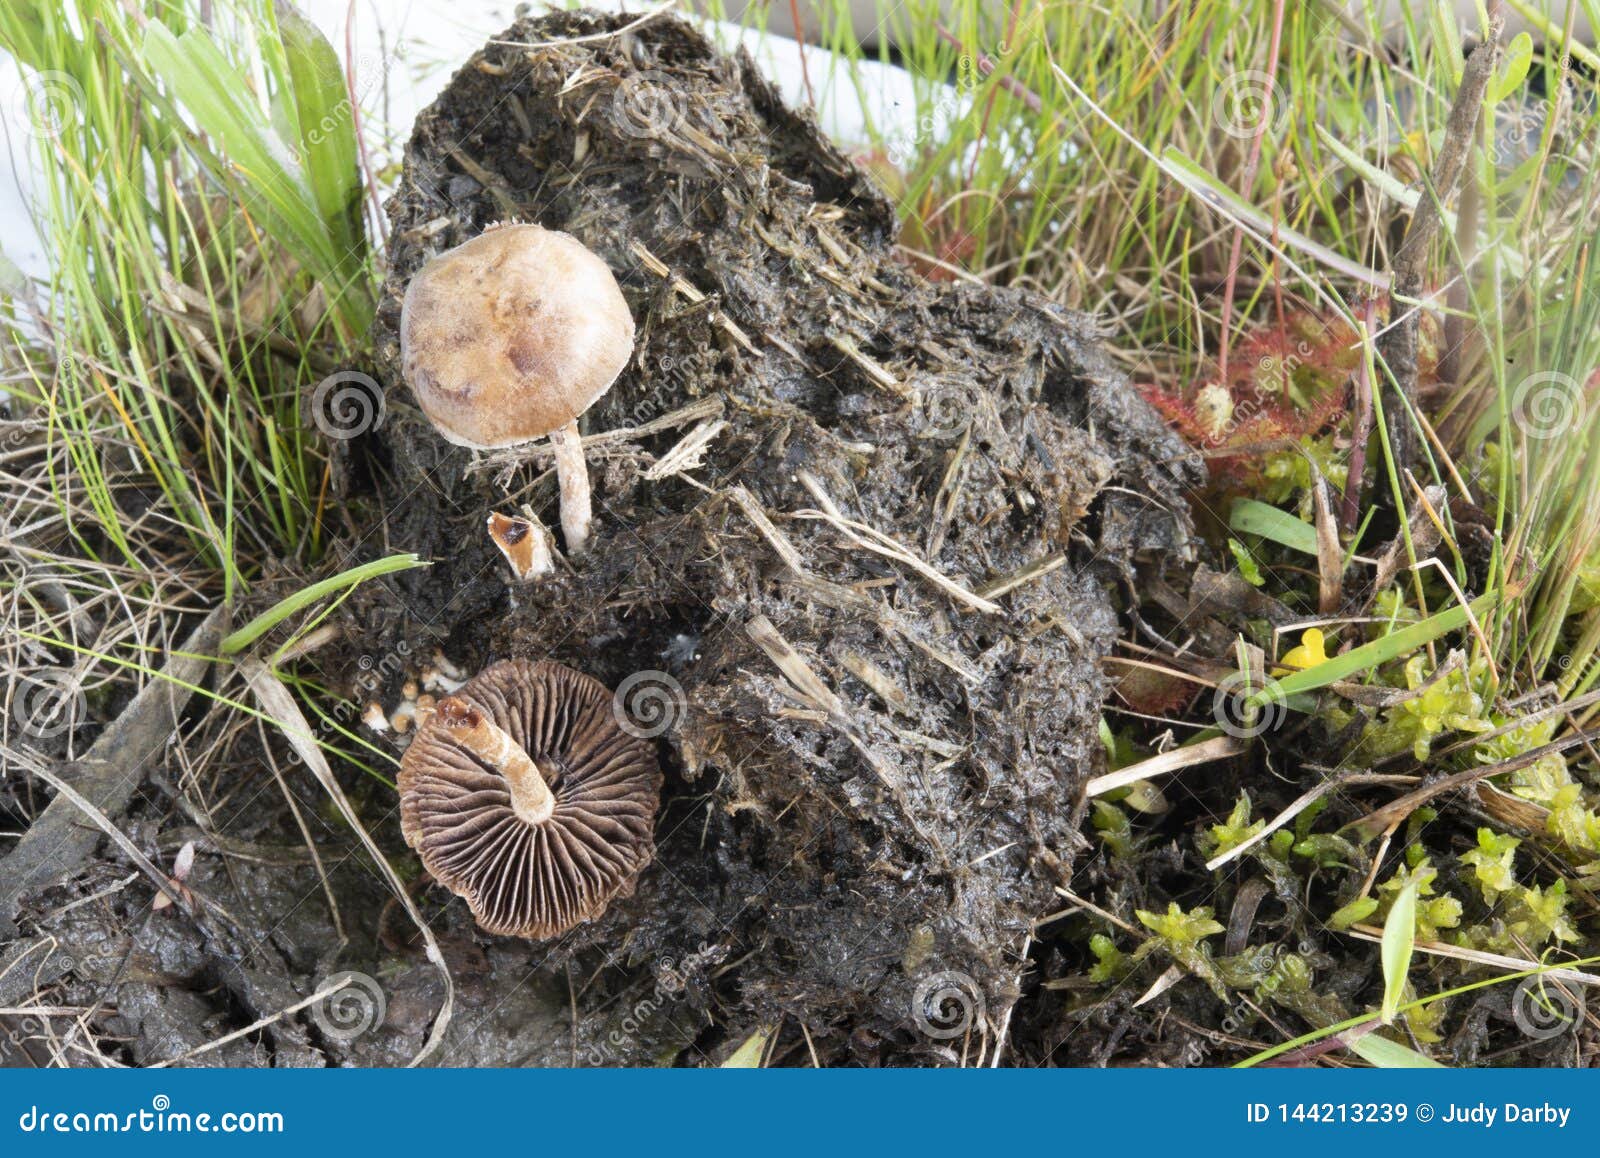 brown mottled mushroom in horse dung